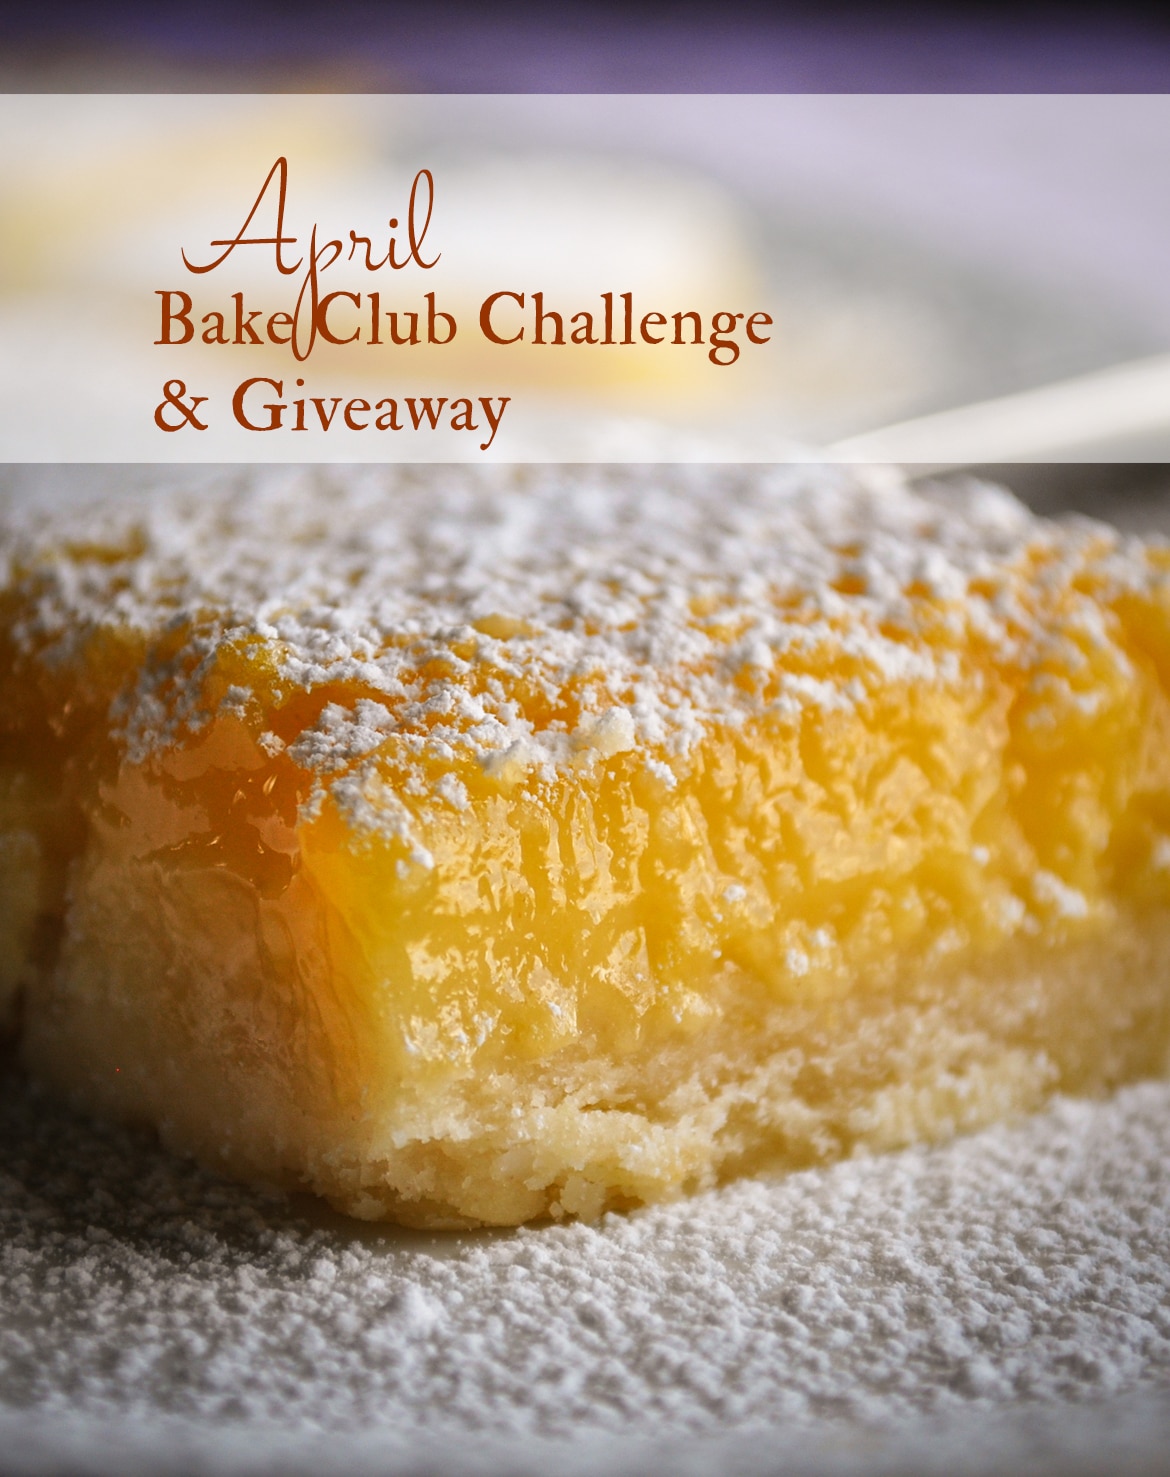 The April Bake Club challenge is Lemon Bars.